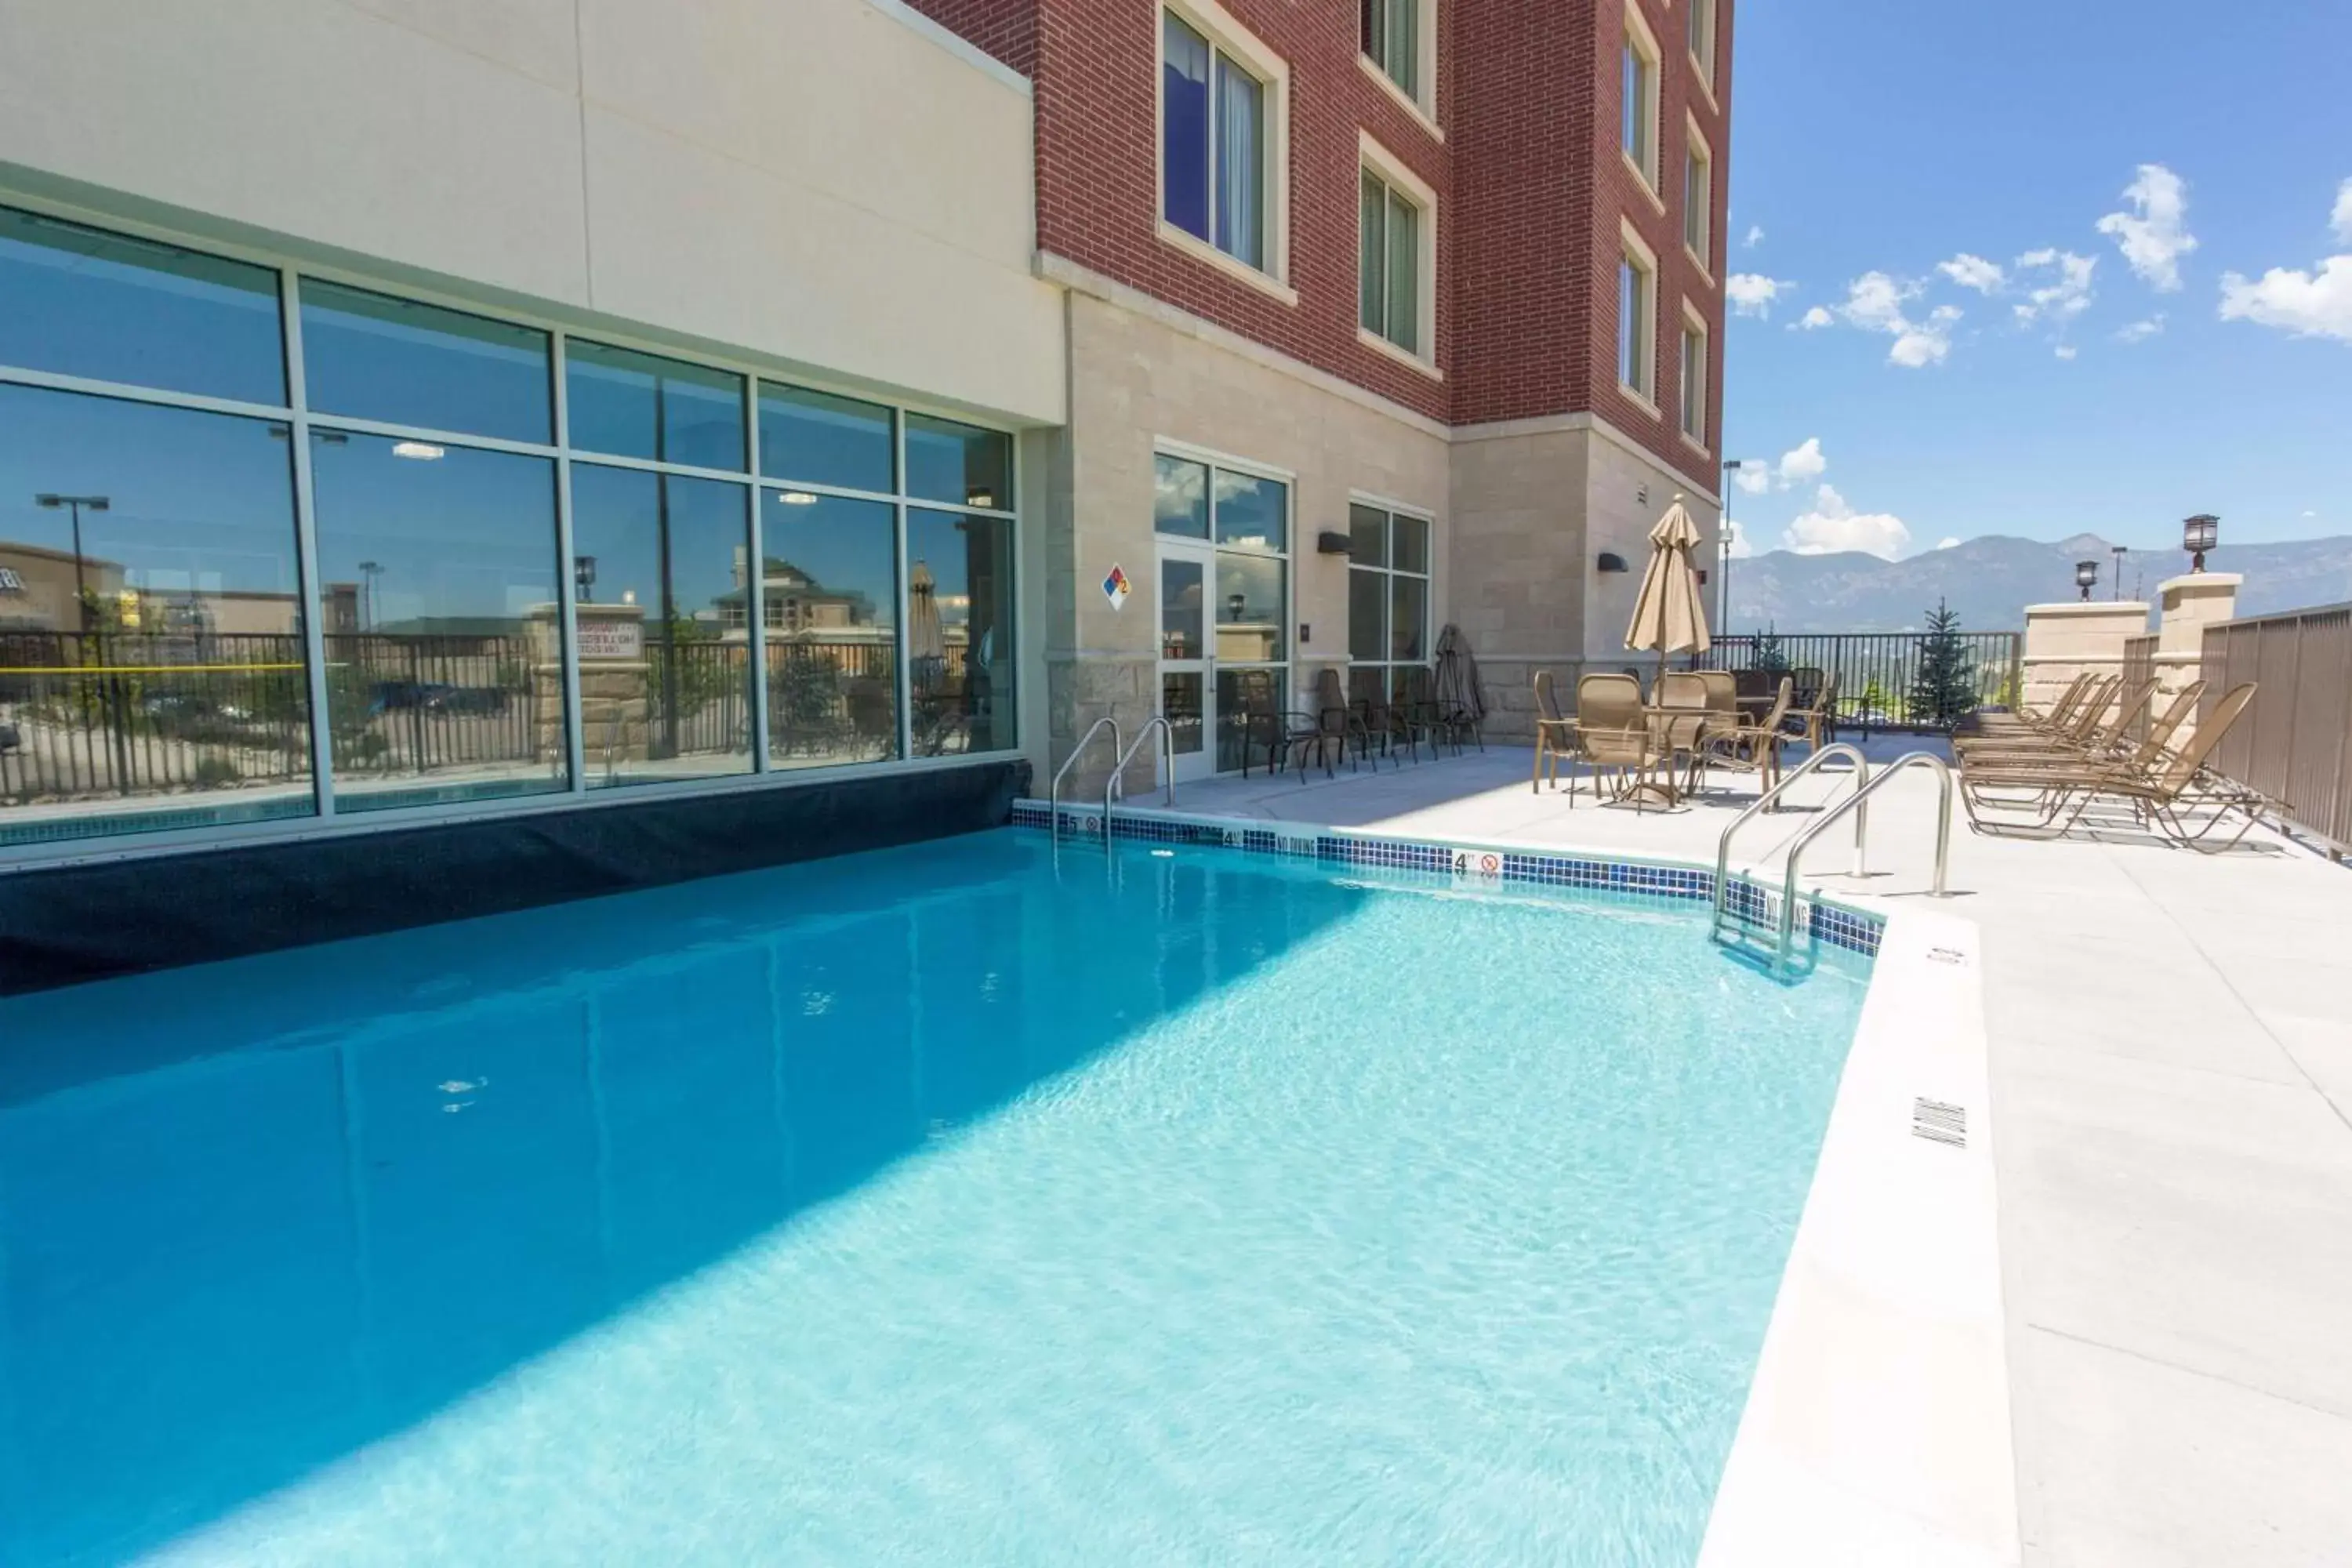 Activities, Swimming Pool in Drury Inn & Suites Colorado Springs Near the Air Force Academy